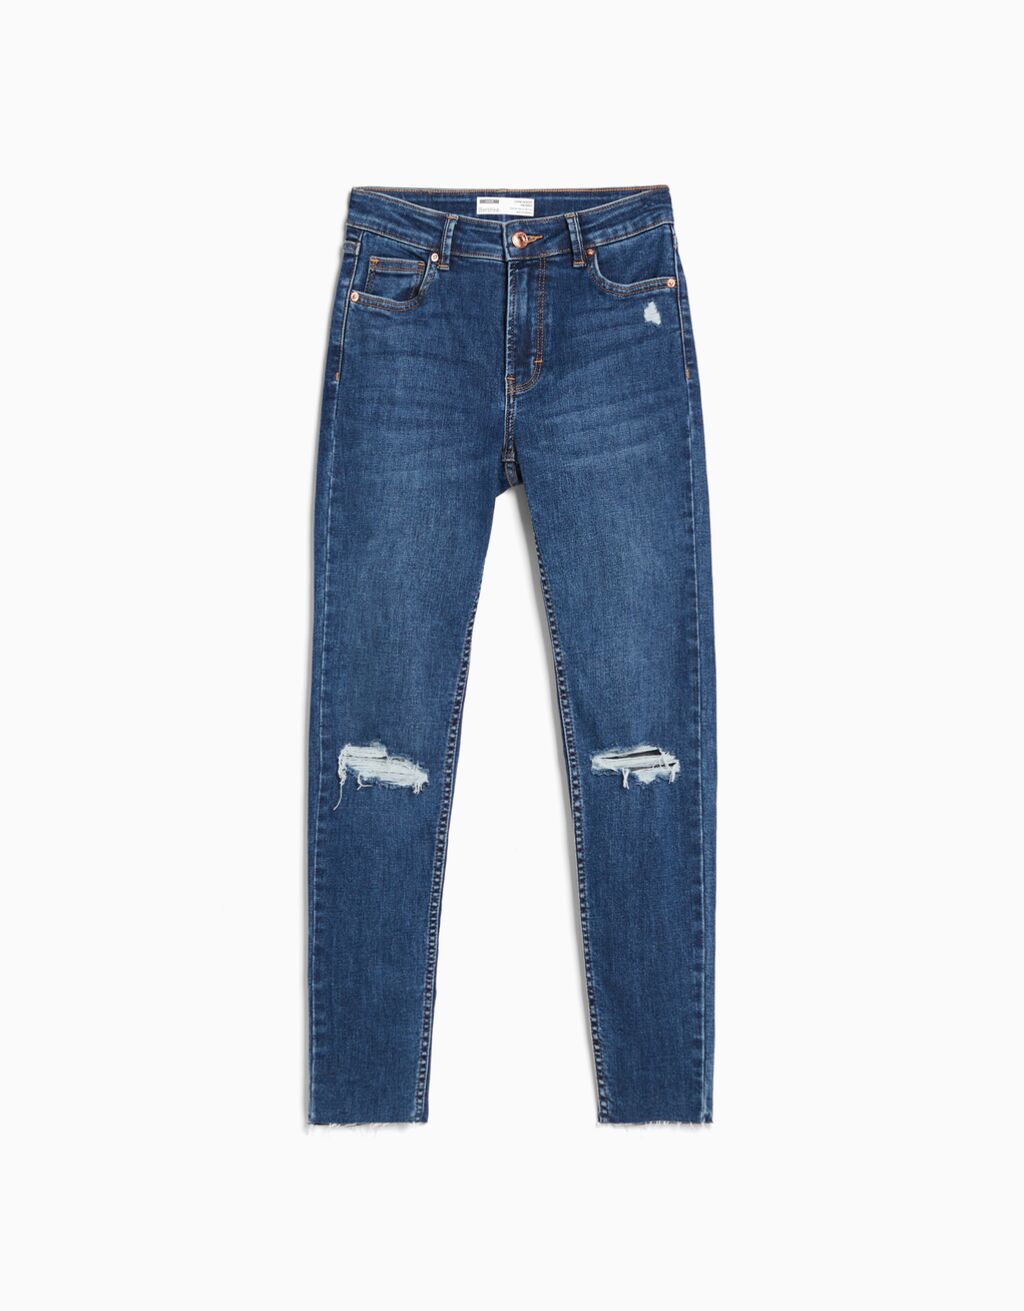 Low-rise skinny vintage jeans